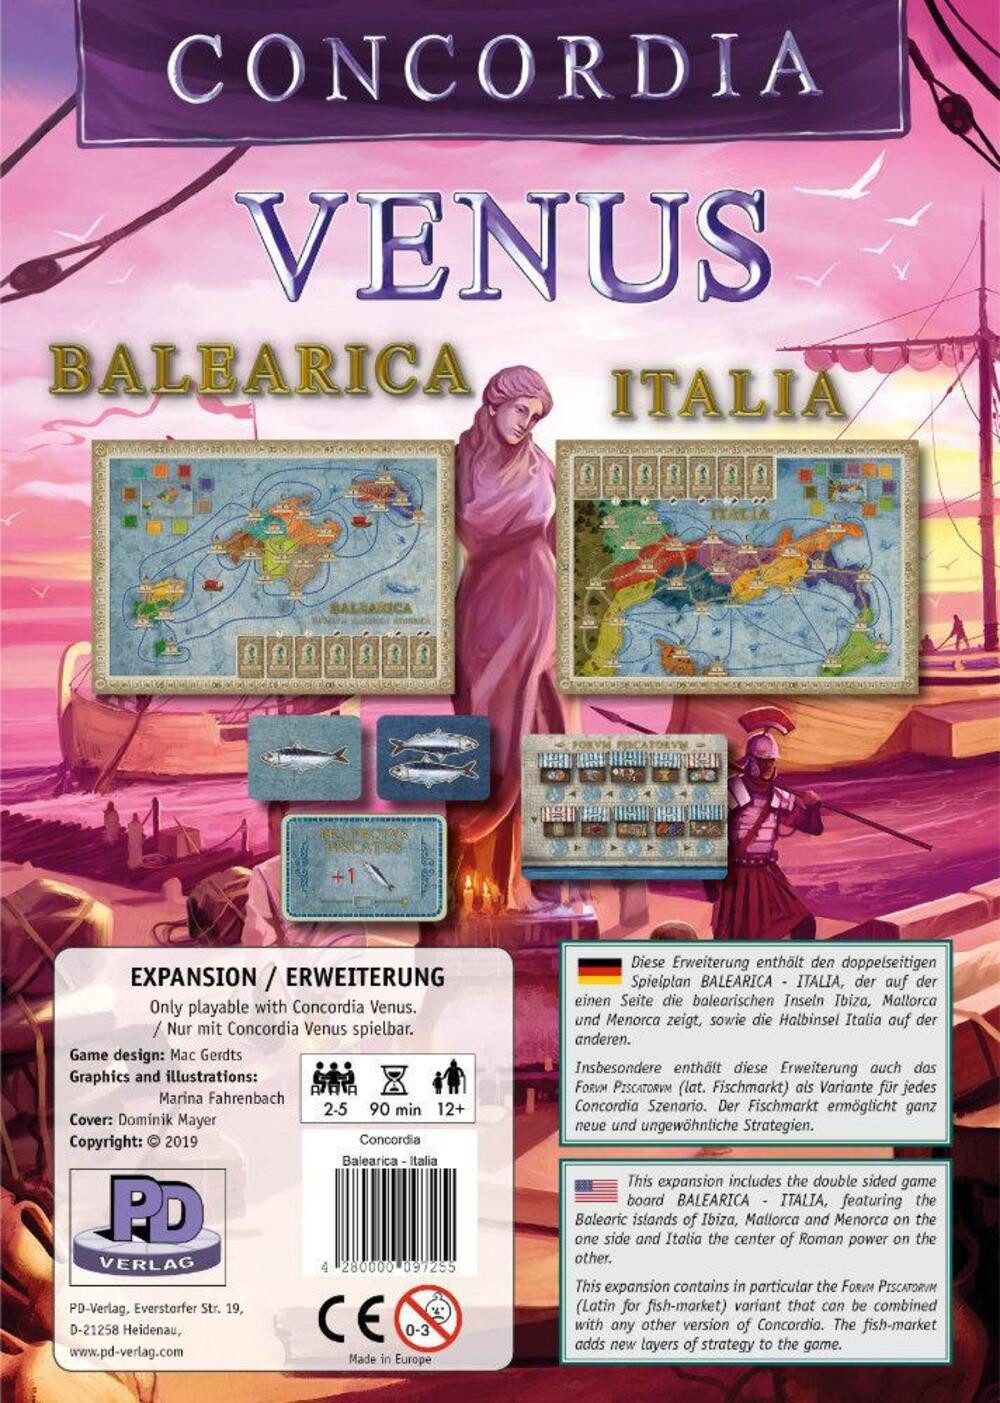 PD-Verlag Spiel, Balearica / Italia